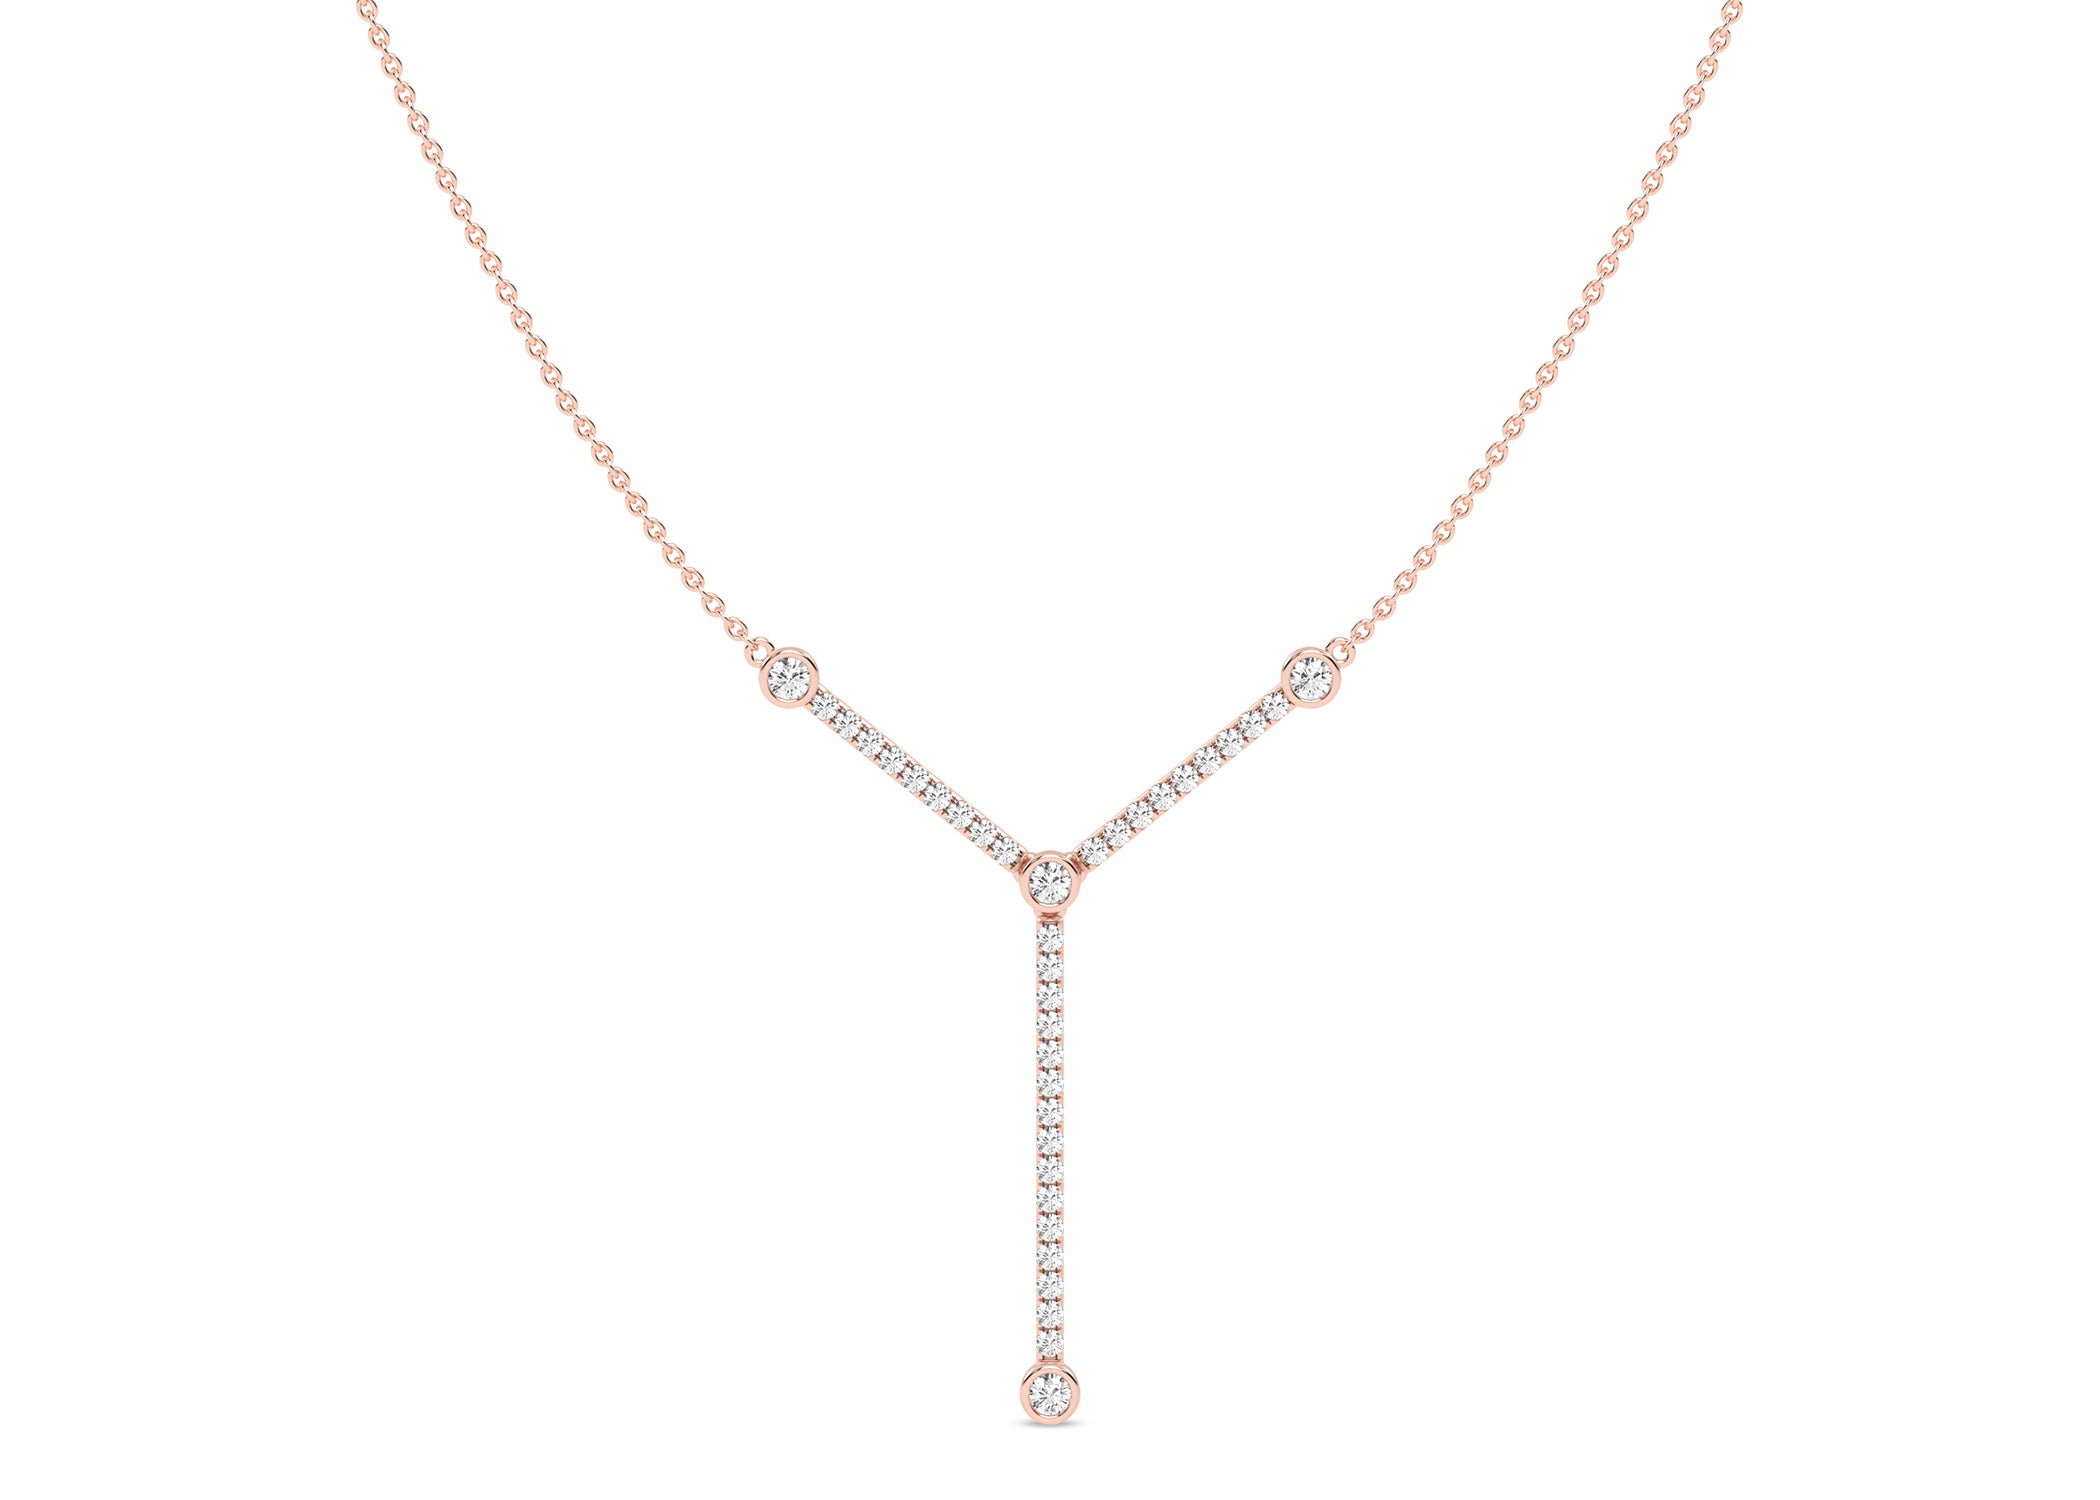 Encompassing Round Stationed Embellished Y Necklace - Necklace 